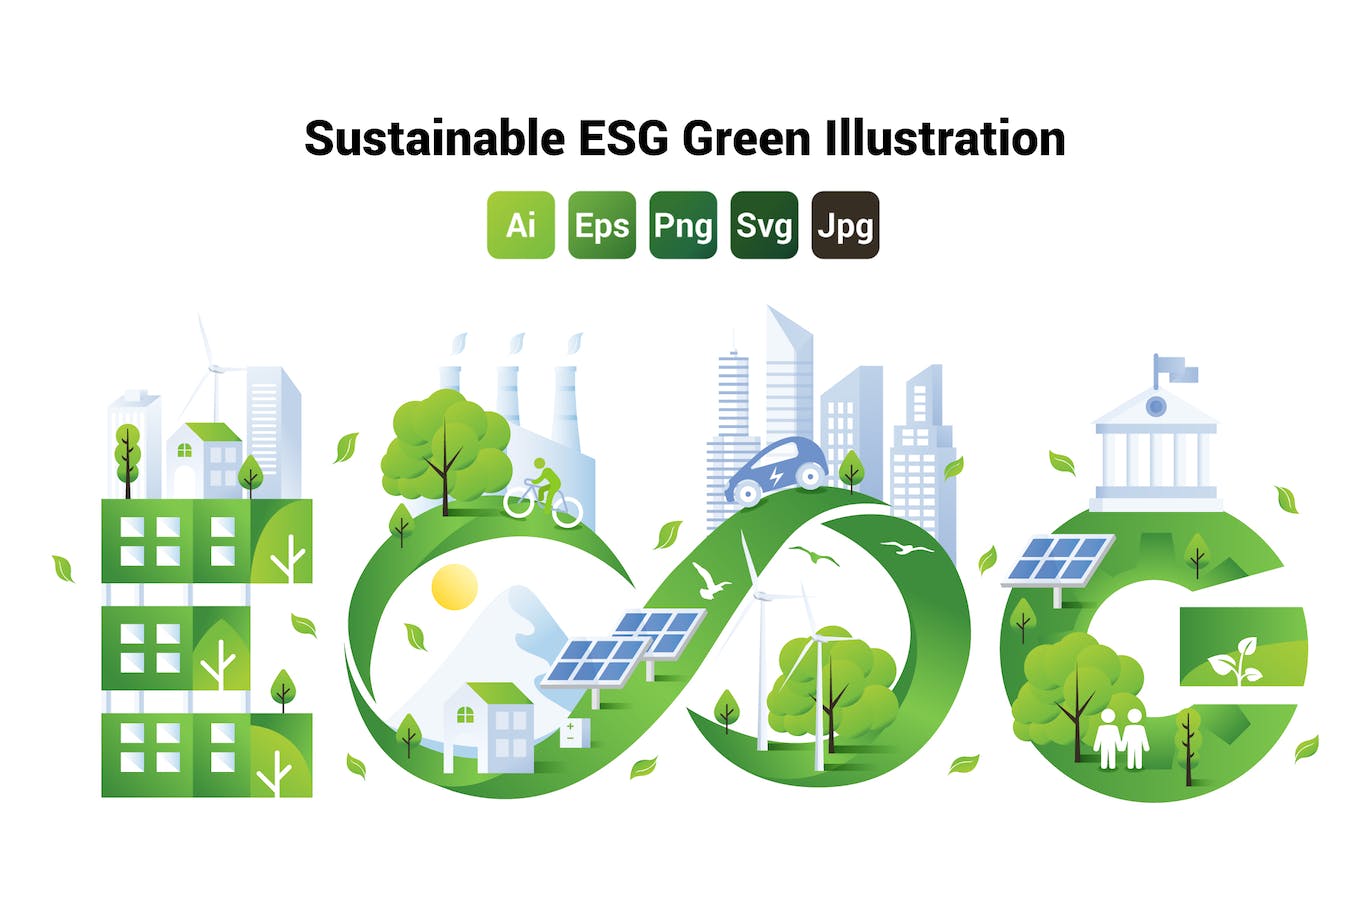 可持续发展概念ESG绿色环保插画 Sustainable ESG Green Illustration 图片素材 第1张